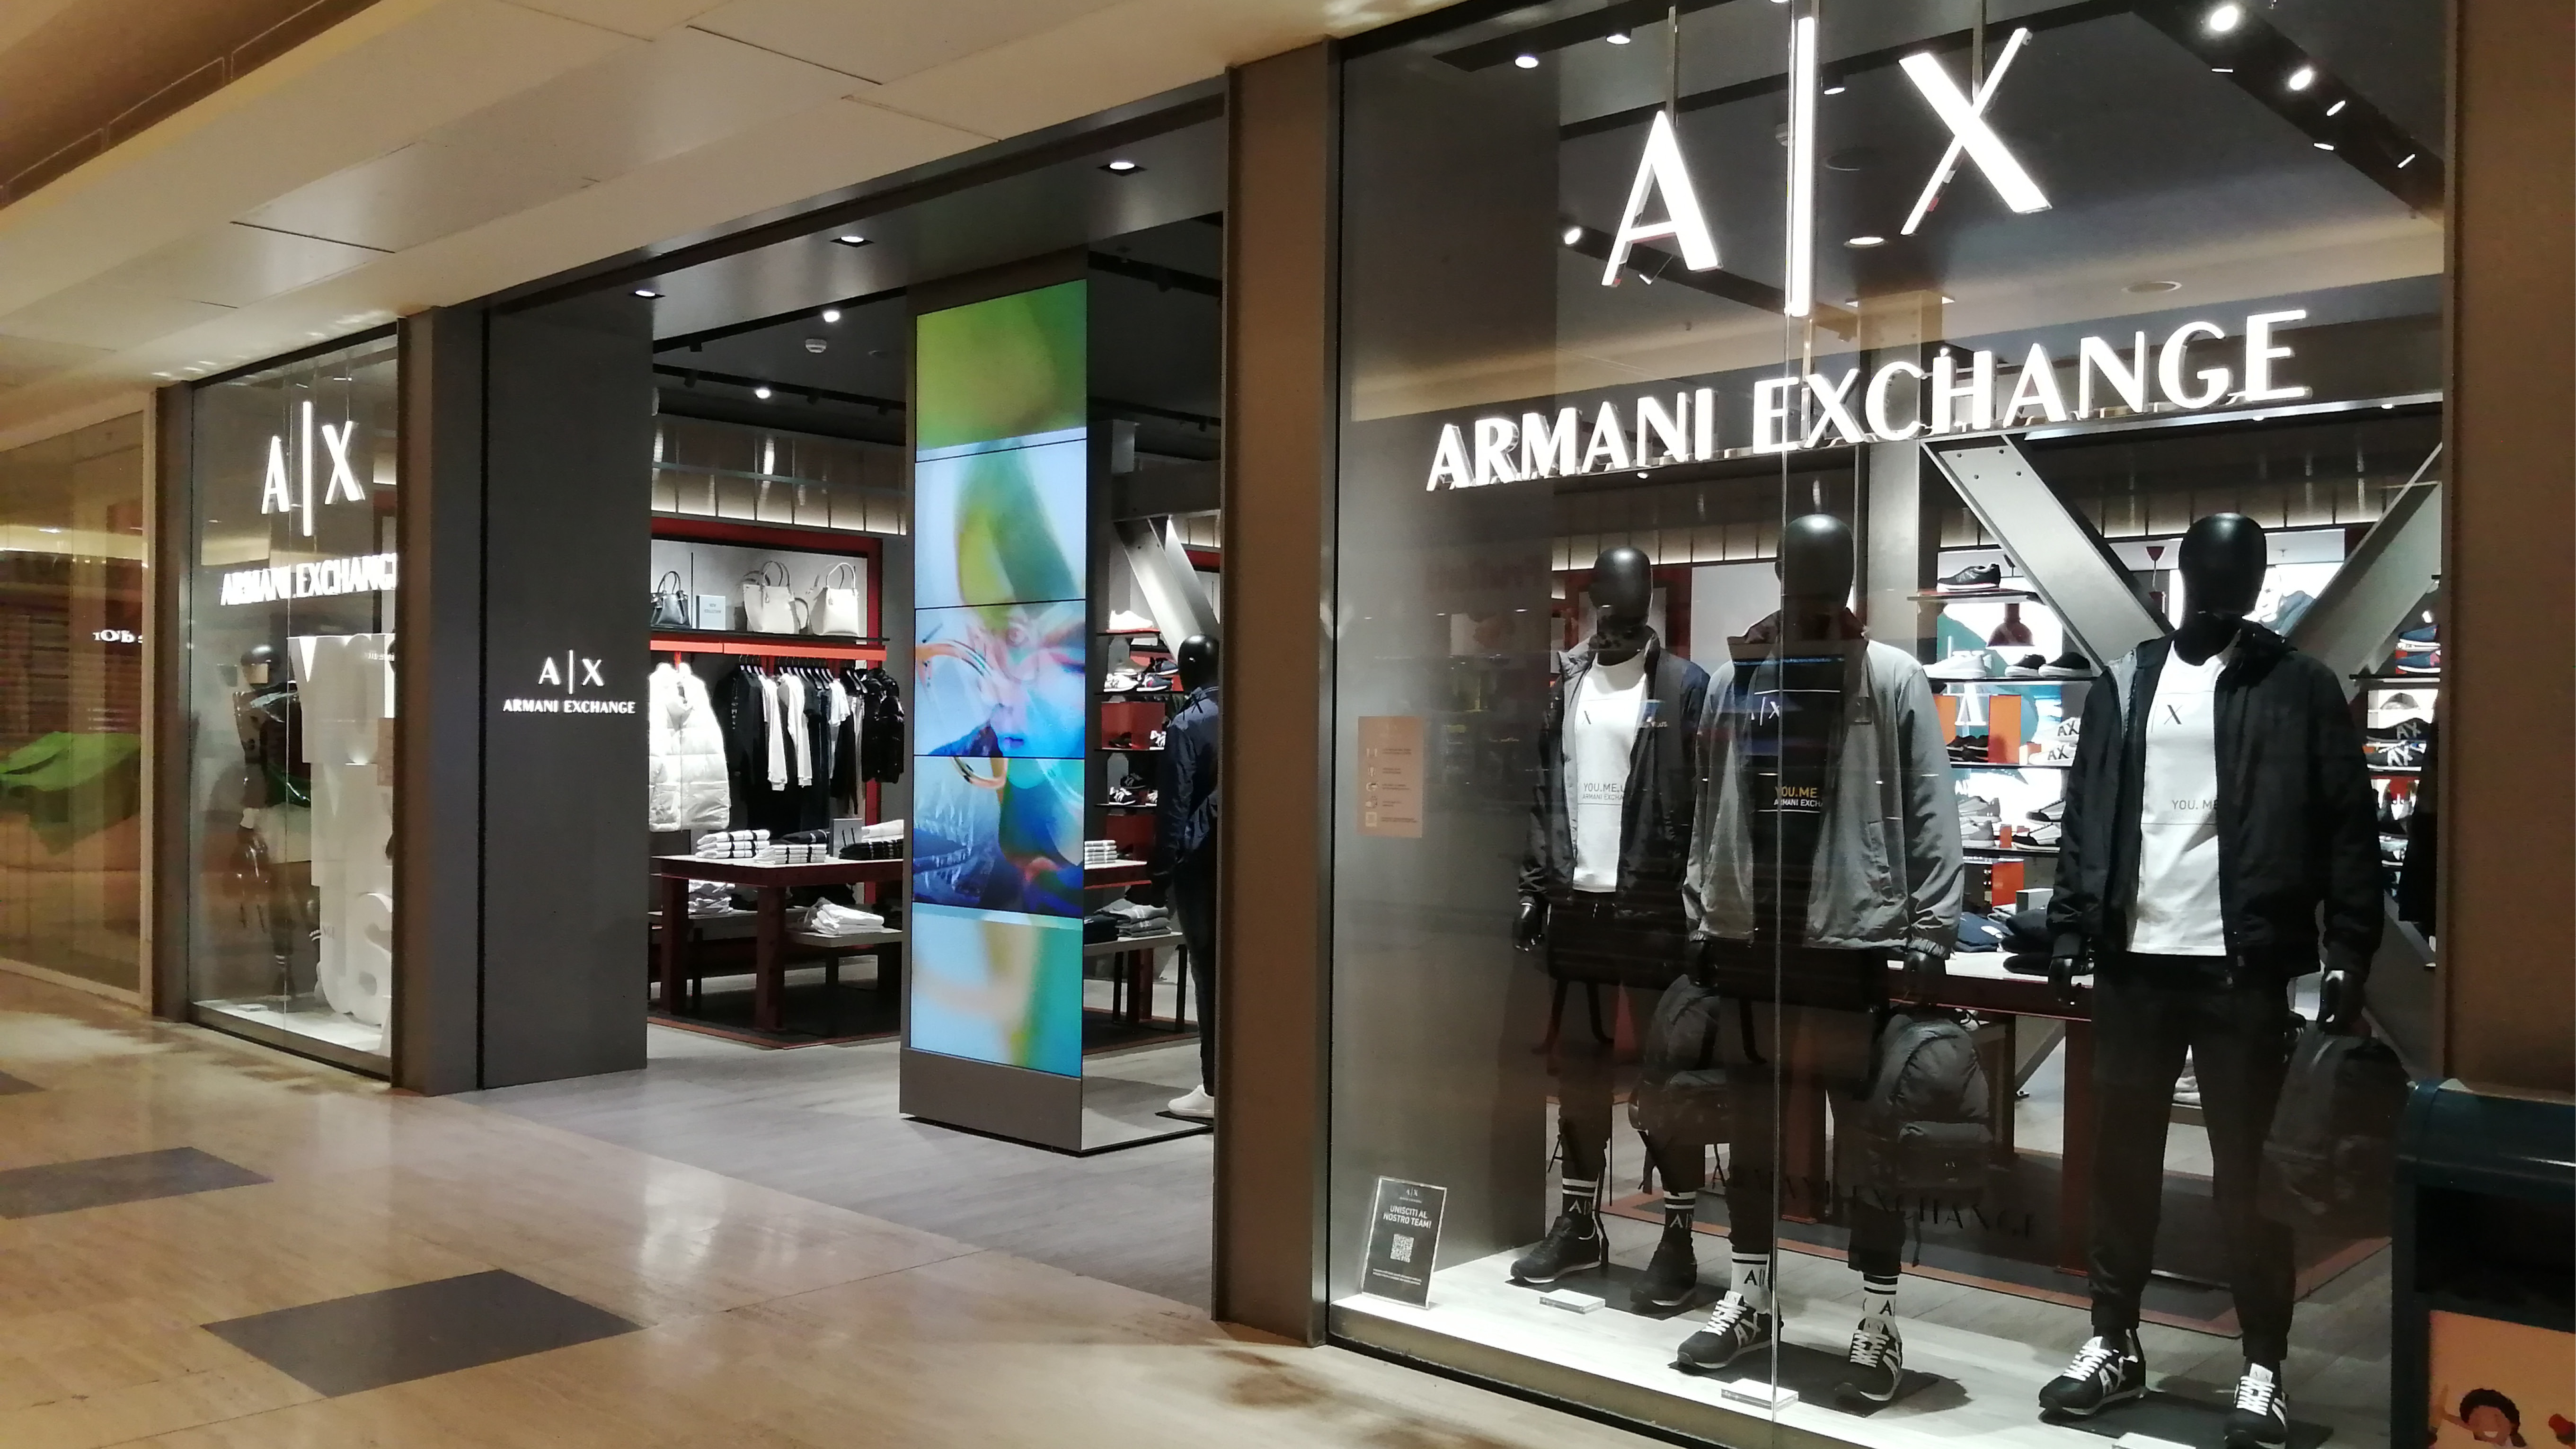 Армани эксчендж. AX Armani Exchange. Армани вывеска. Аутлет Армани в Италии.